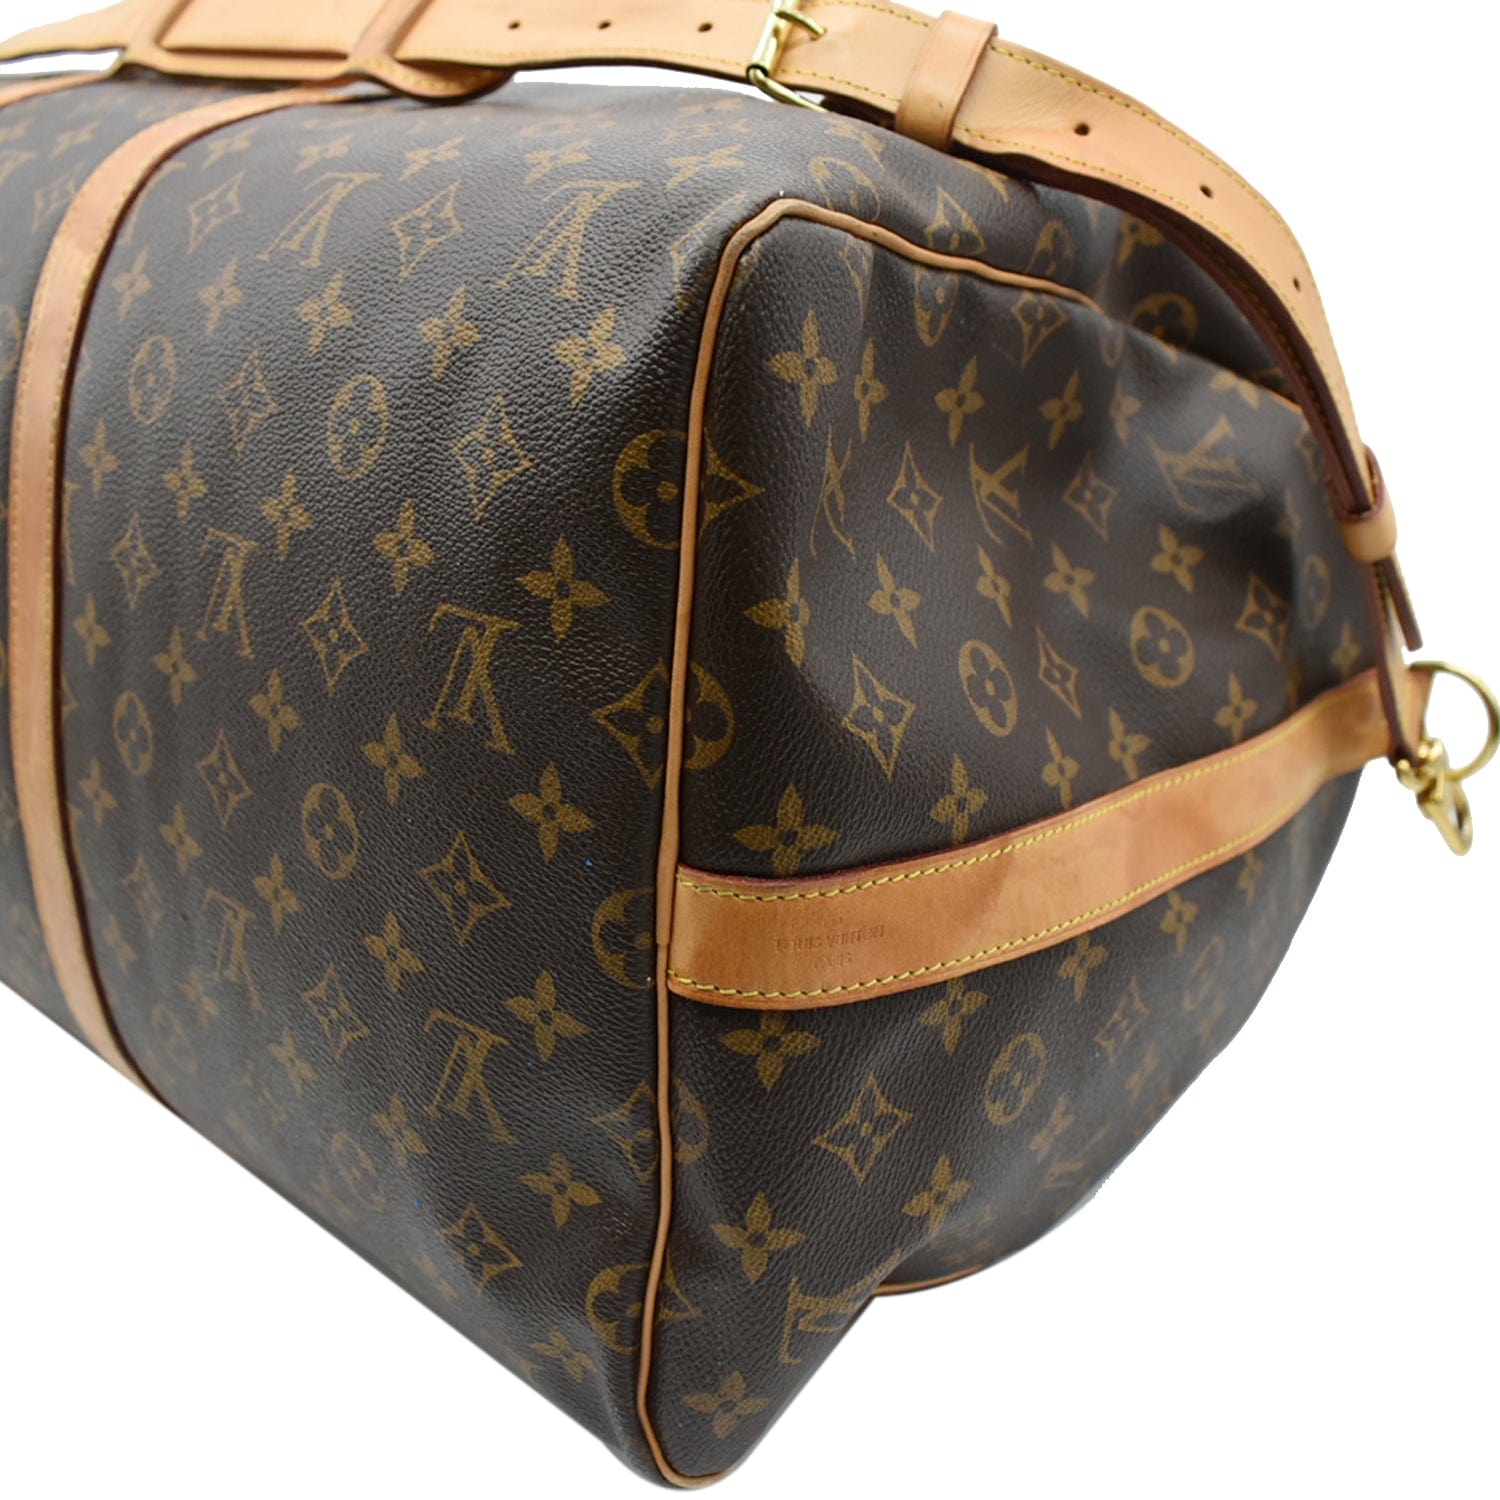 Louis Vuitton 'keepall 55' Travel Bag in Brown